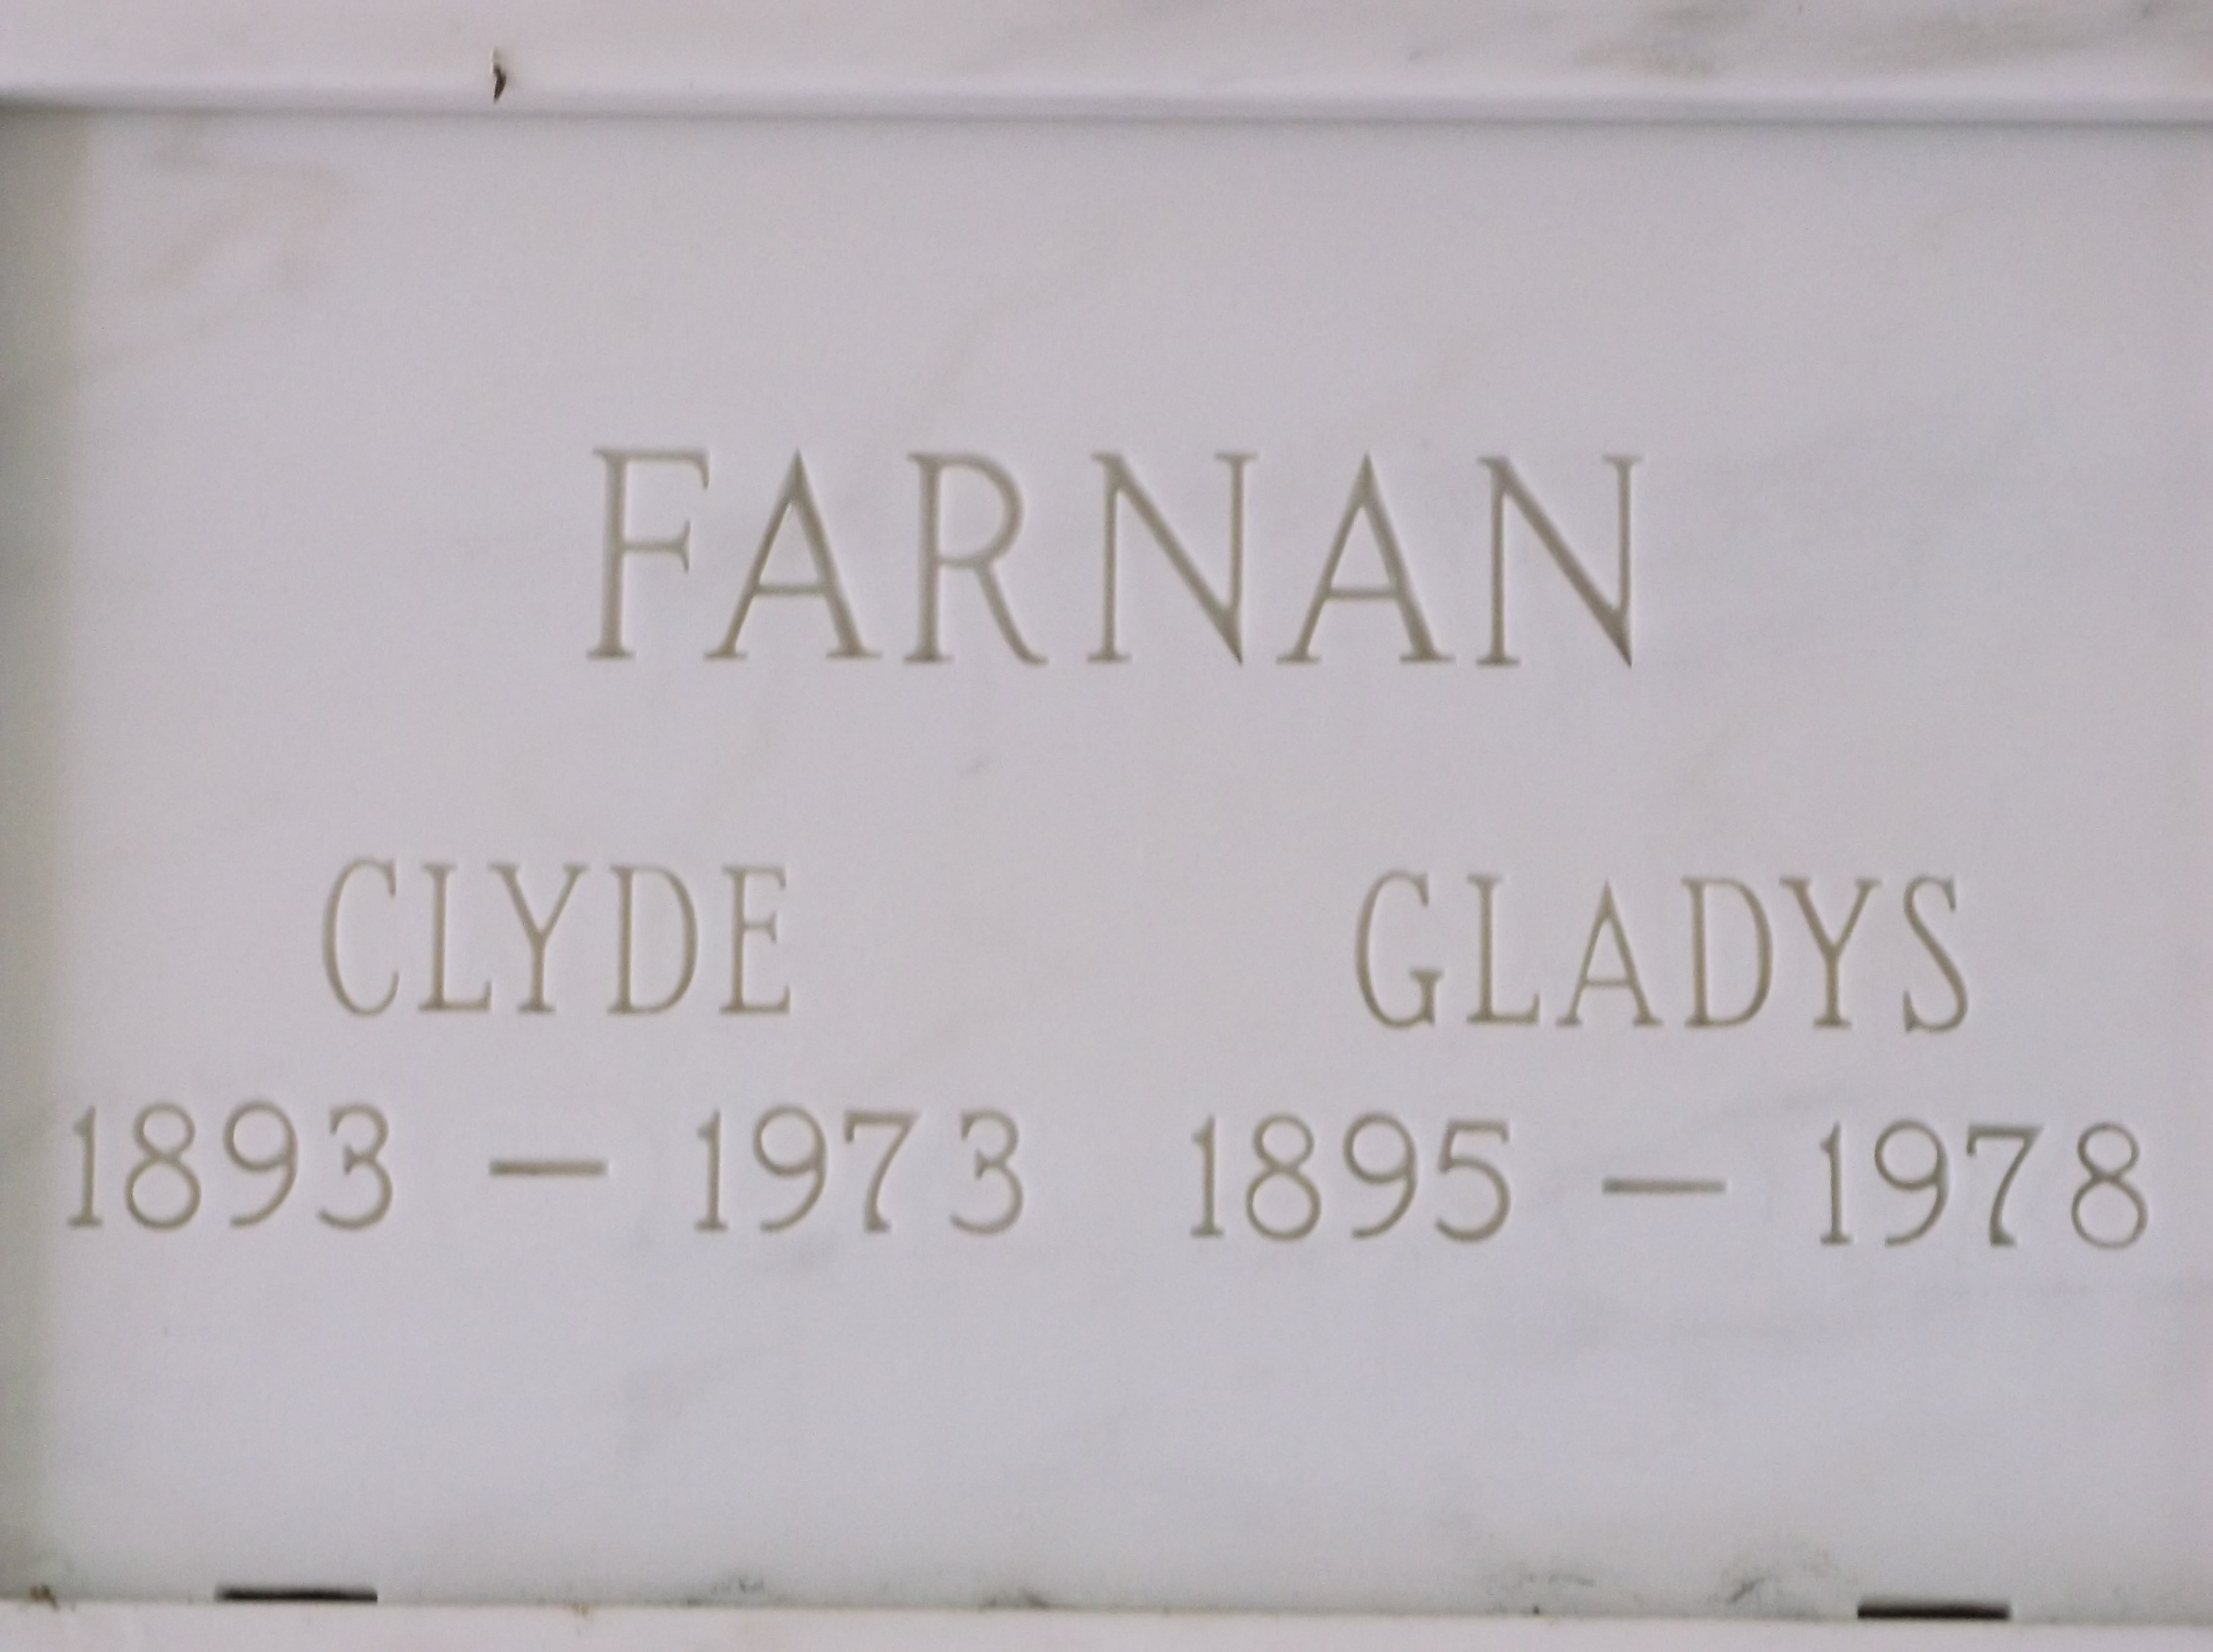 Gladys Farnan